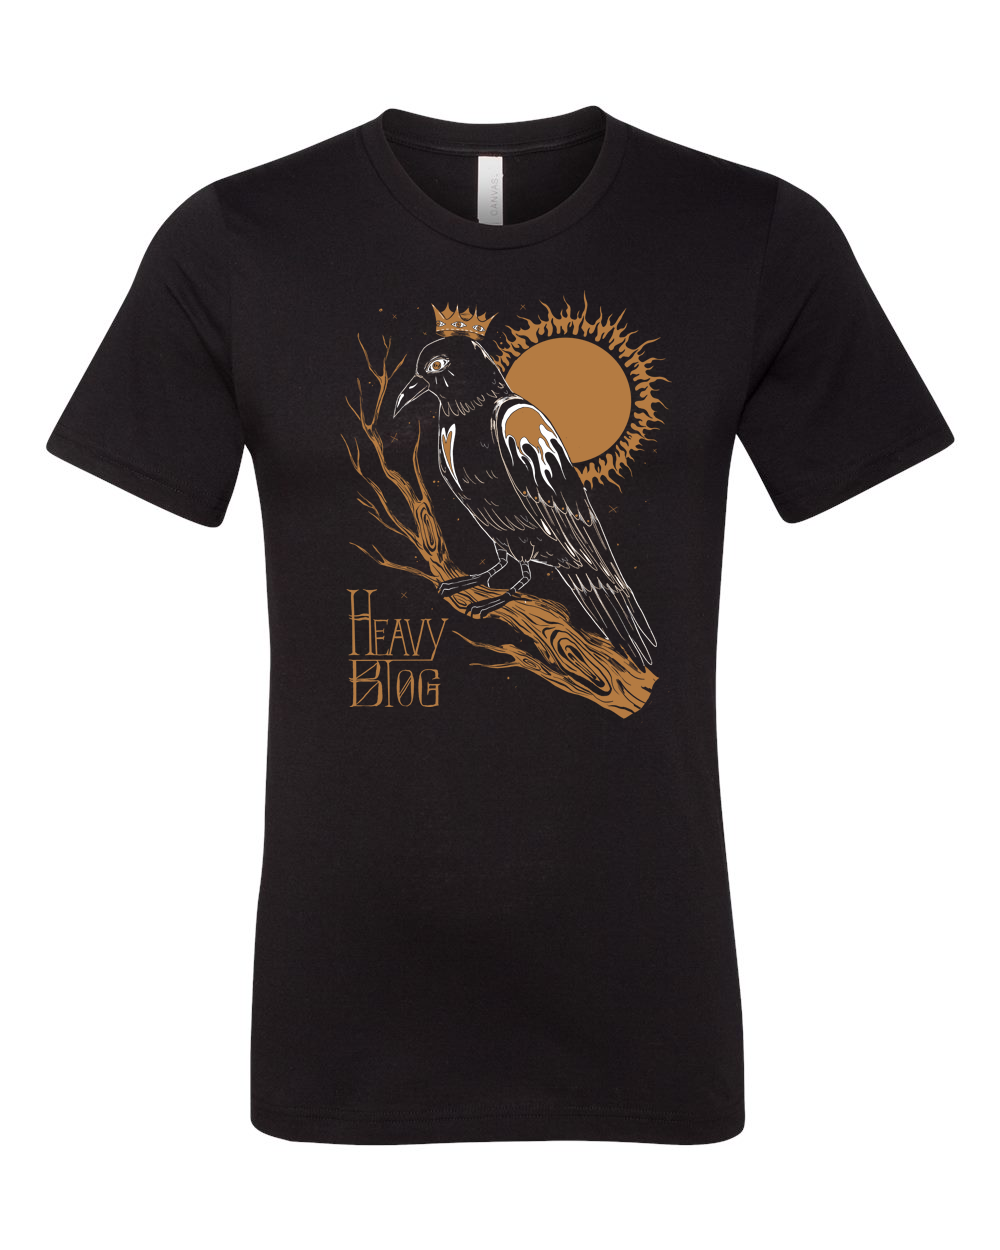 HEAVY BLOG IS HEAVY - Crow [Shirt]